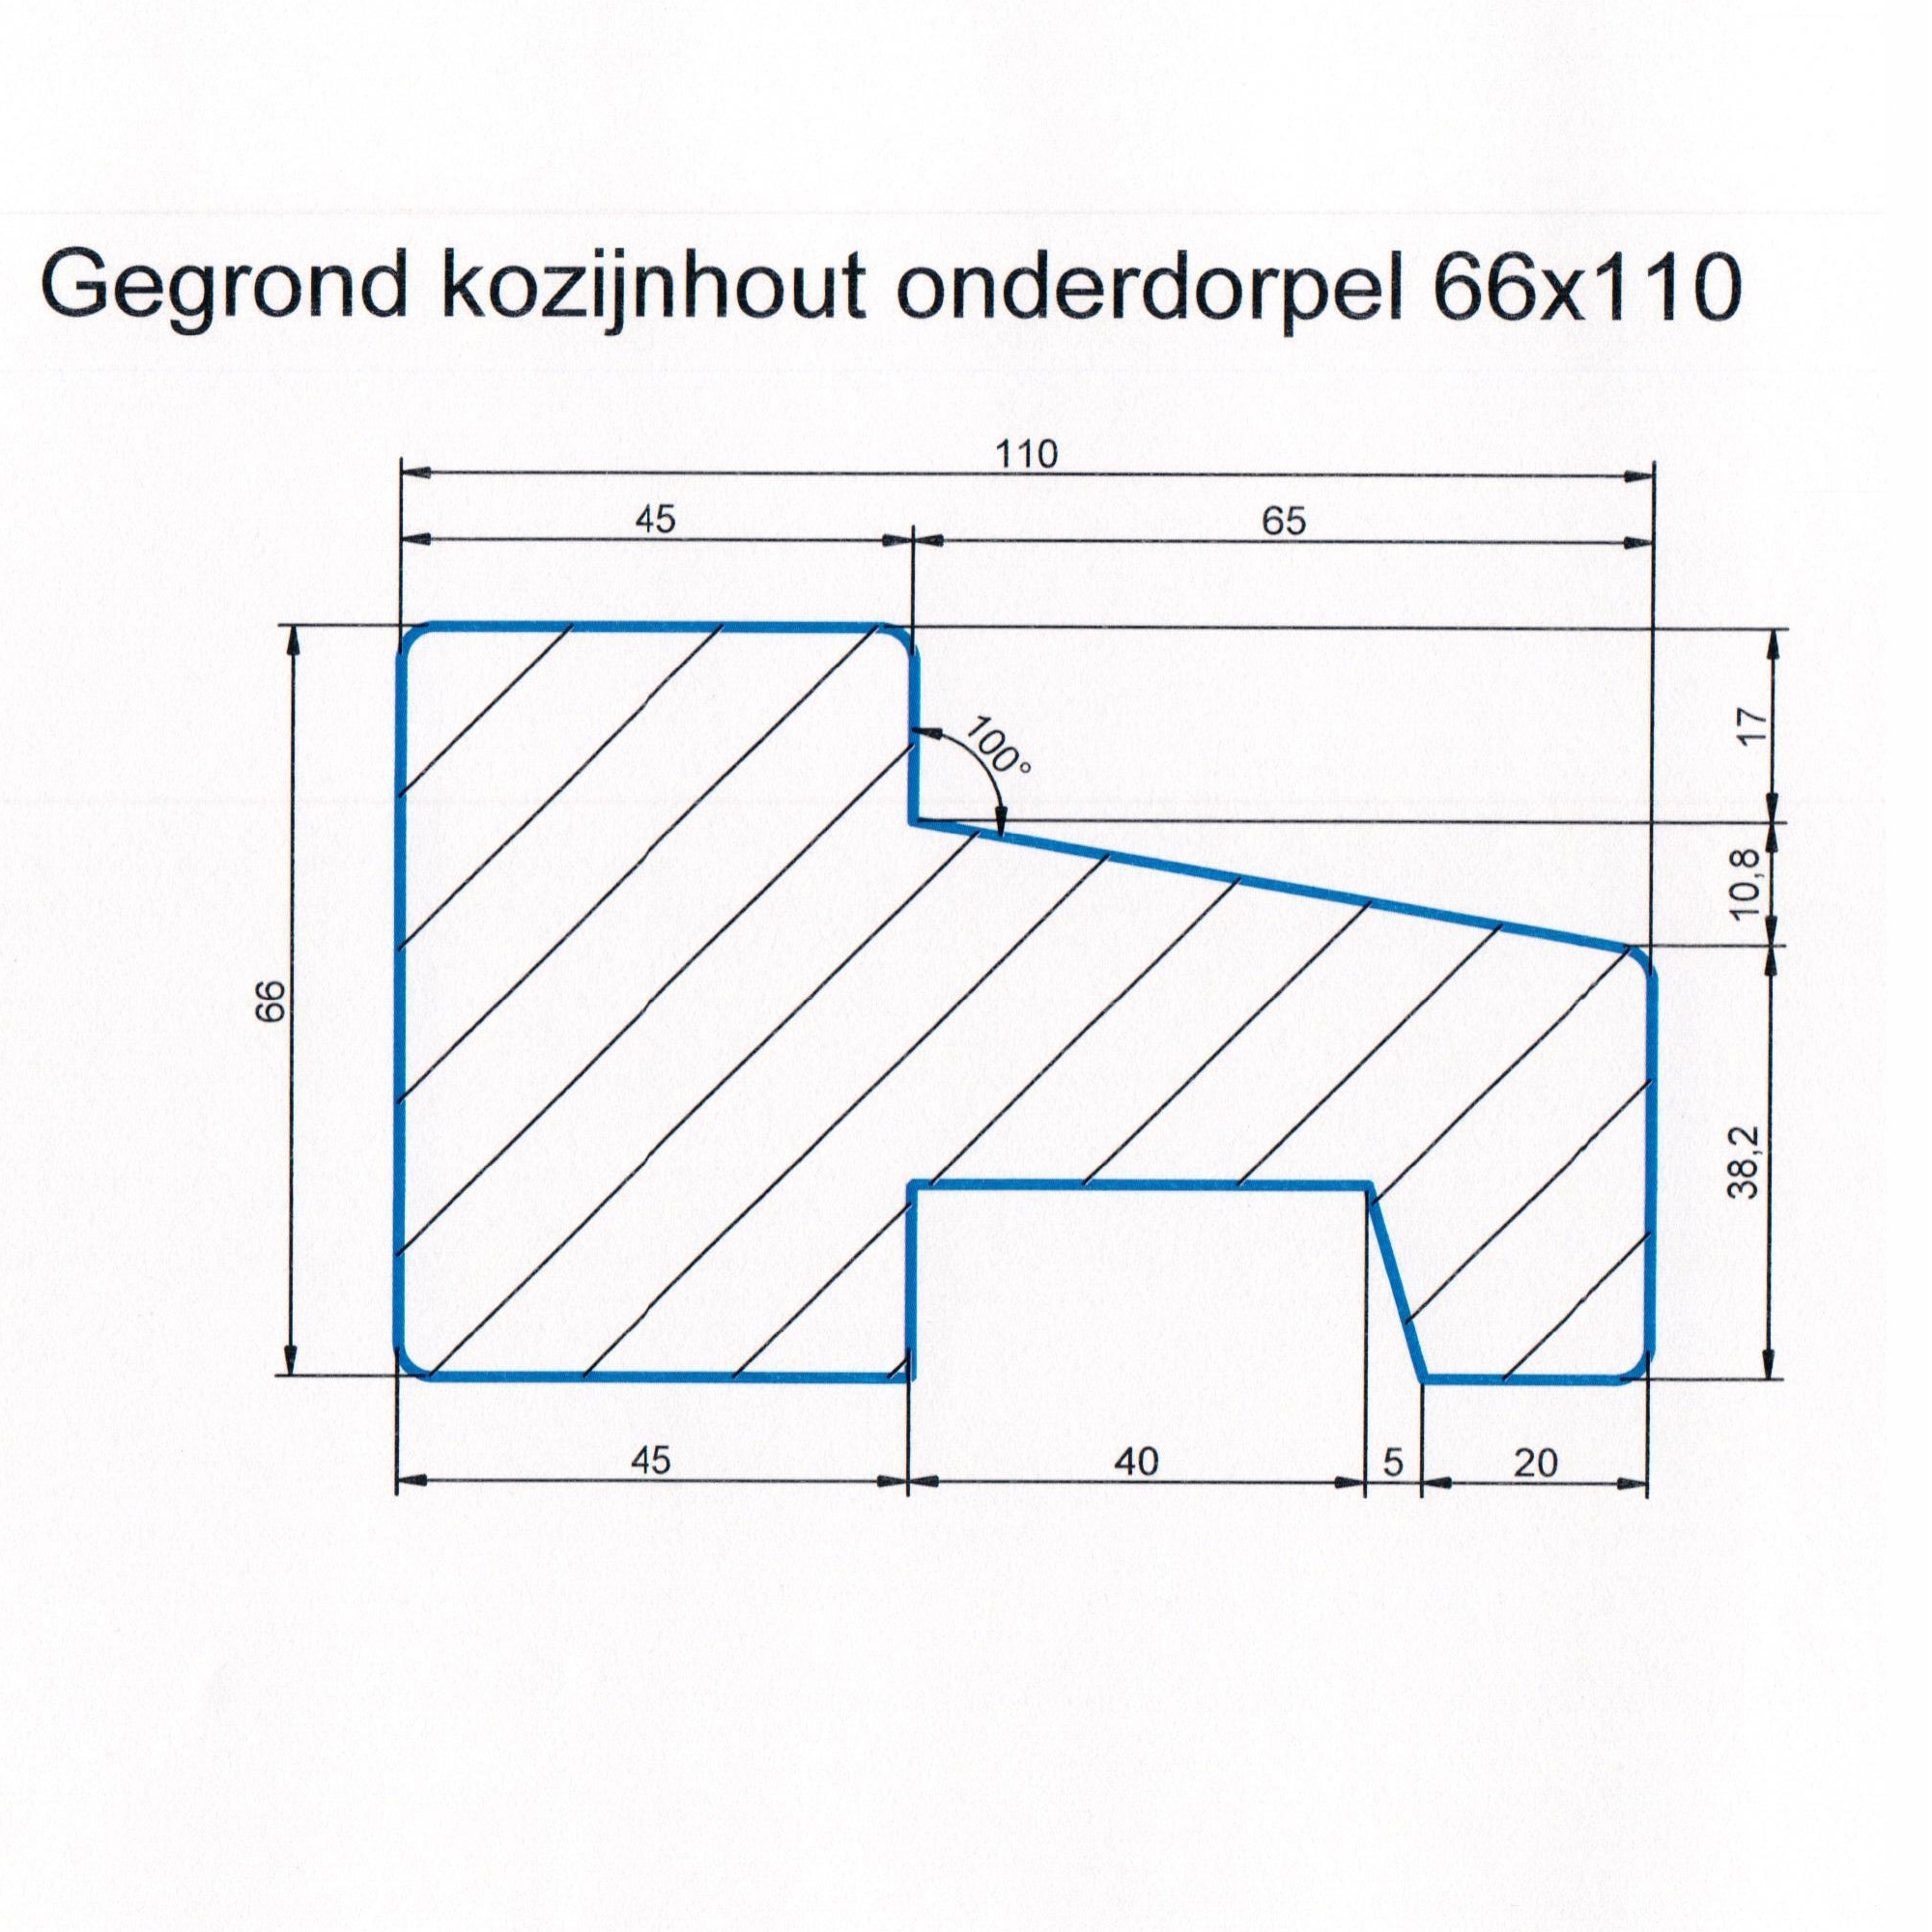 Hardhout 66x110 kozijnhout gegrond L=1180 onderdorpel